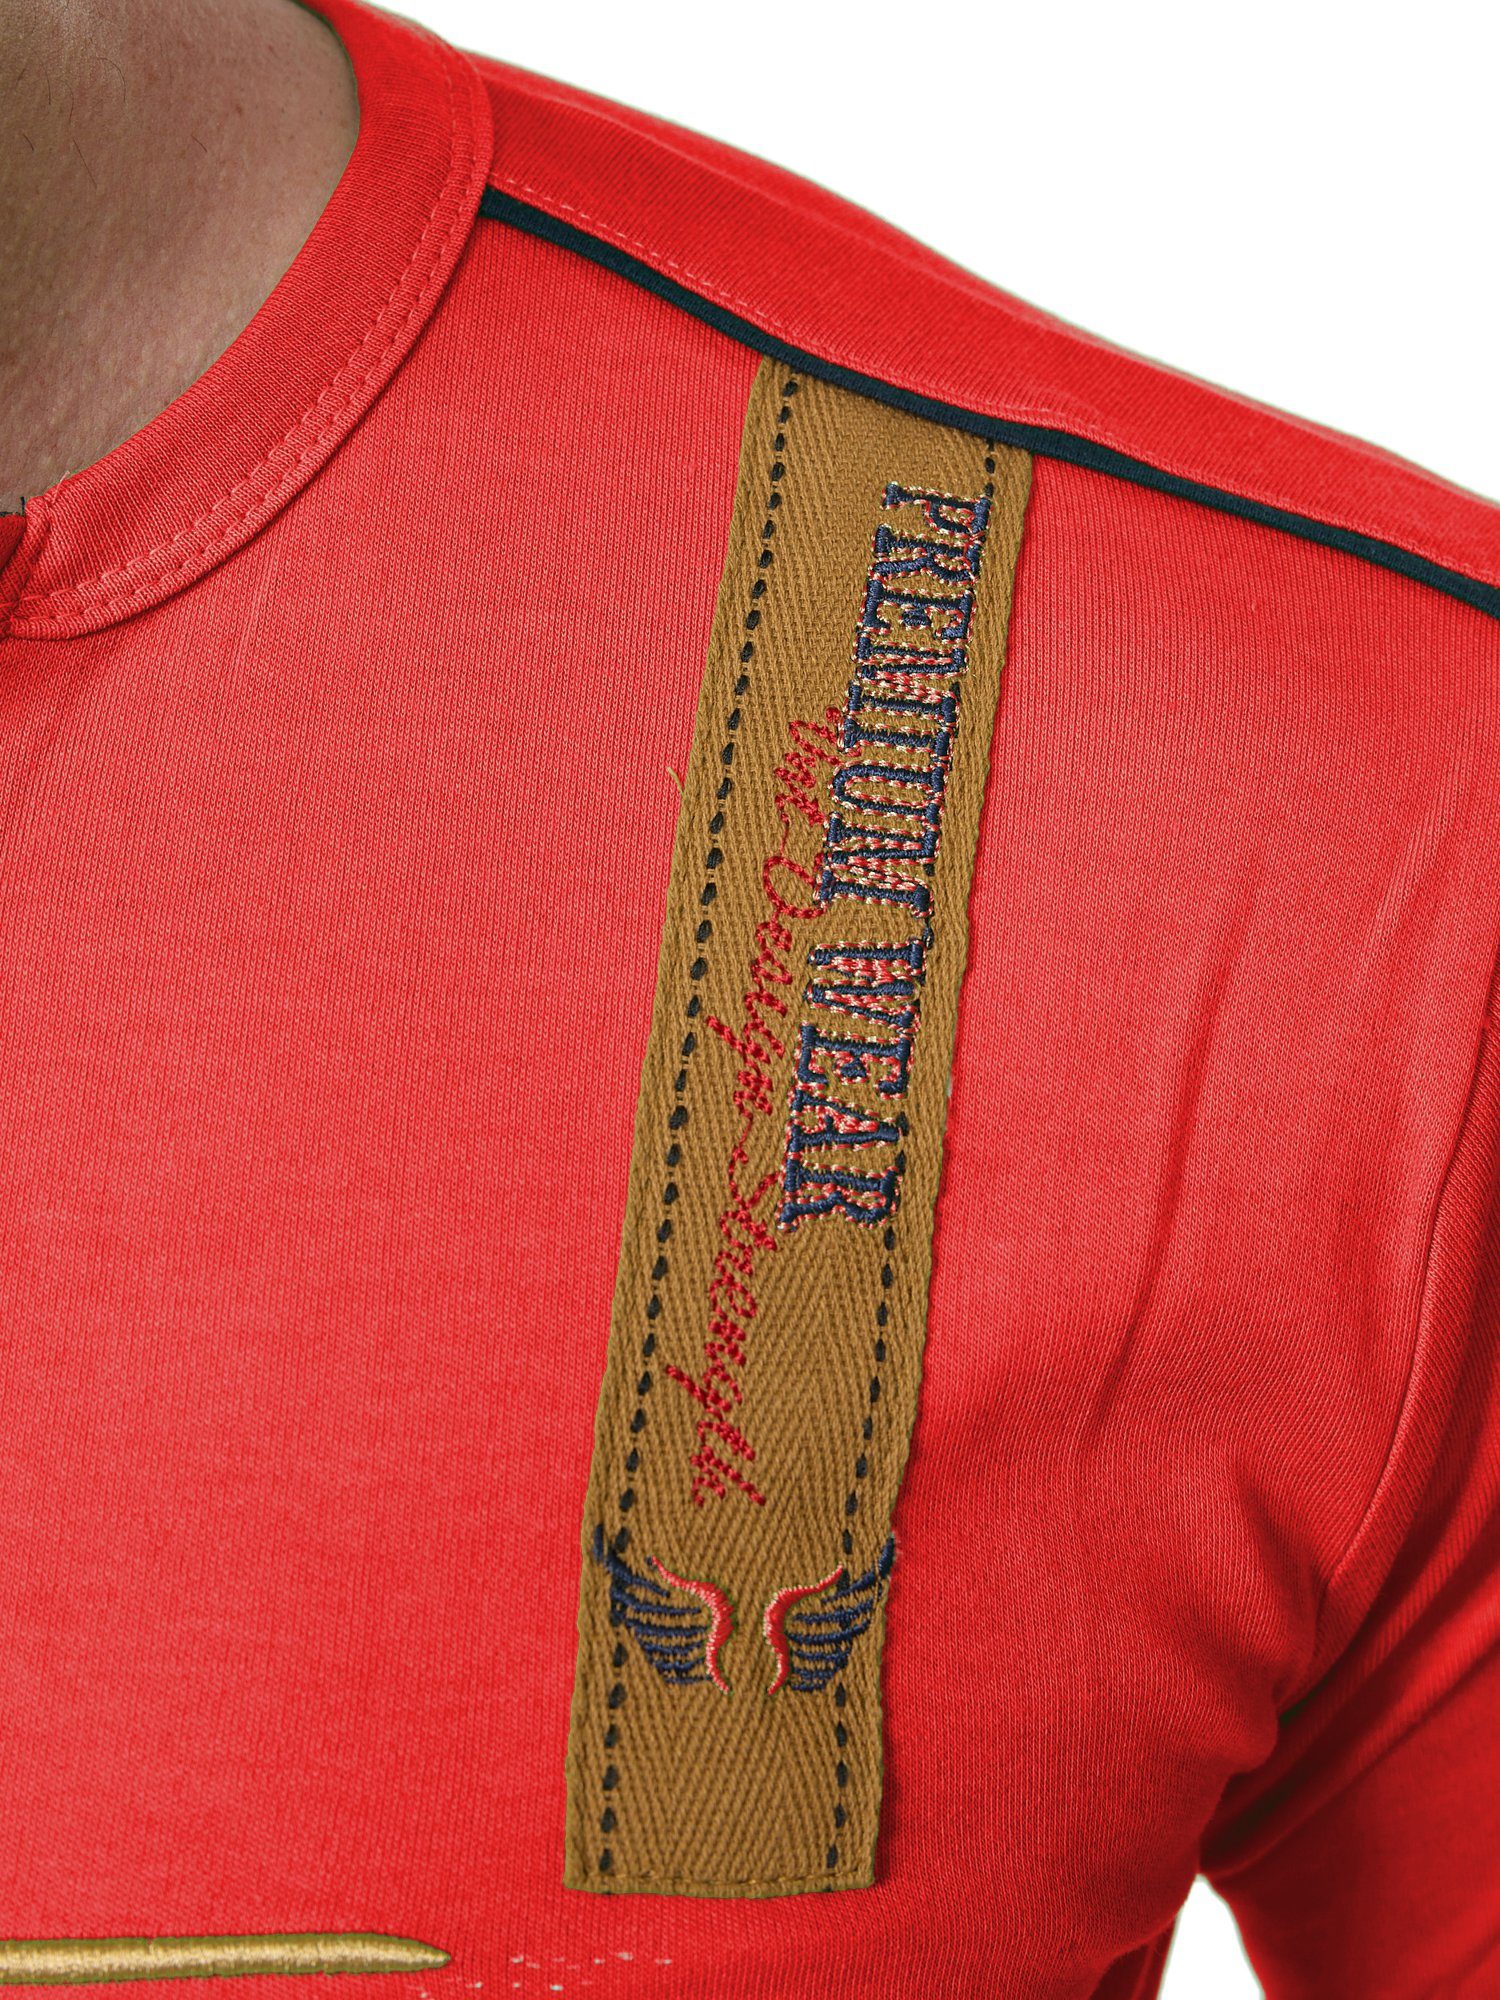 Rot Langarmshirt Langarmshirt, Adventure Herren (Packung, Longshirt, modischen Baumwolle, mit 1-tlg) L.gonline Applikationen 100% Patches 8888